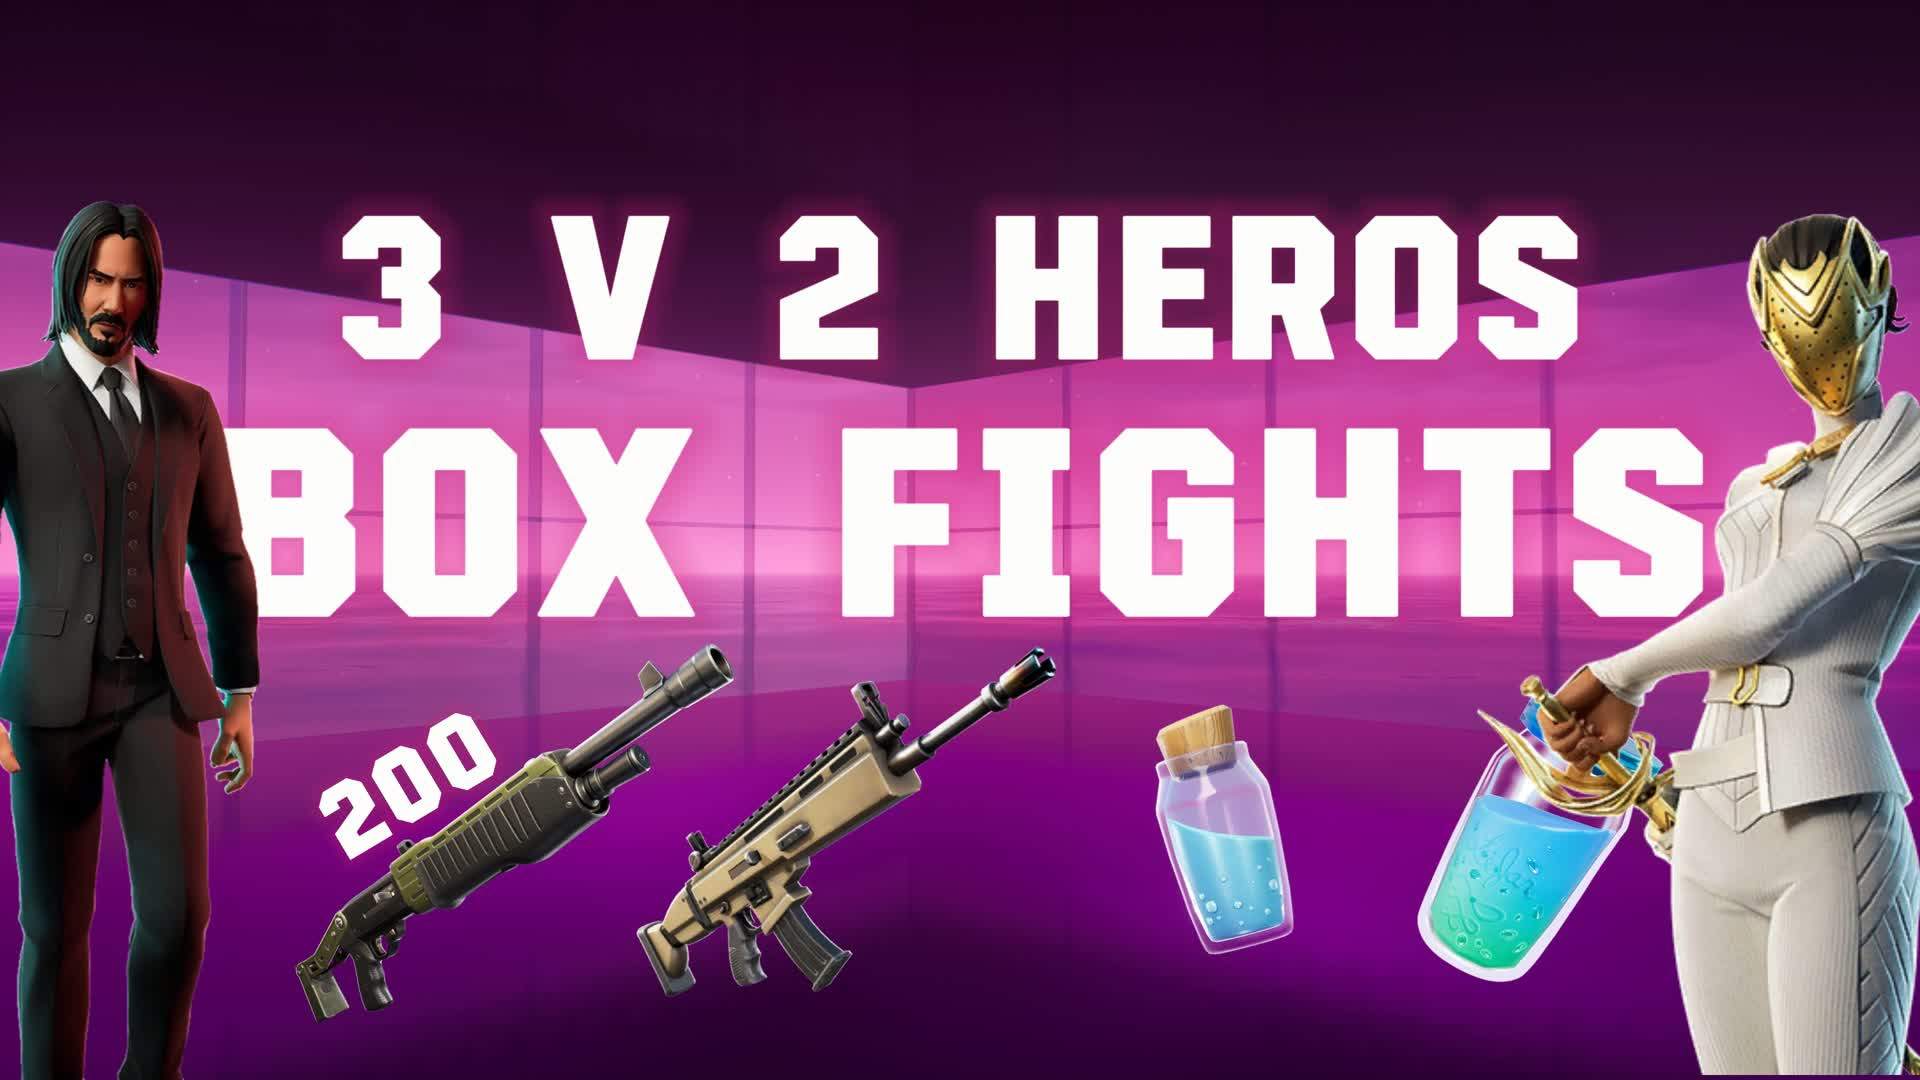 MEGA BOX FIGHT 3V2 HEROS 🦸